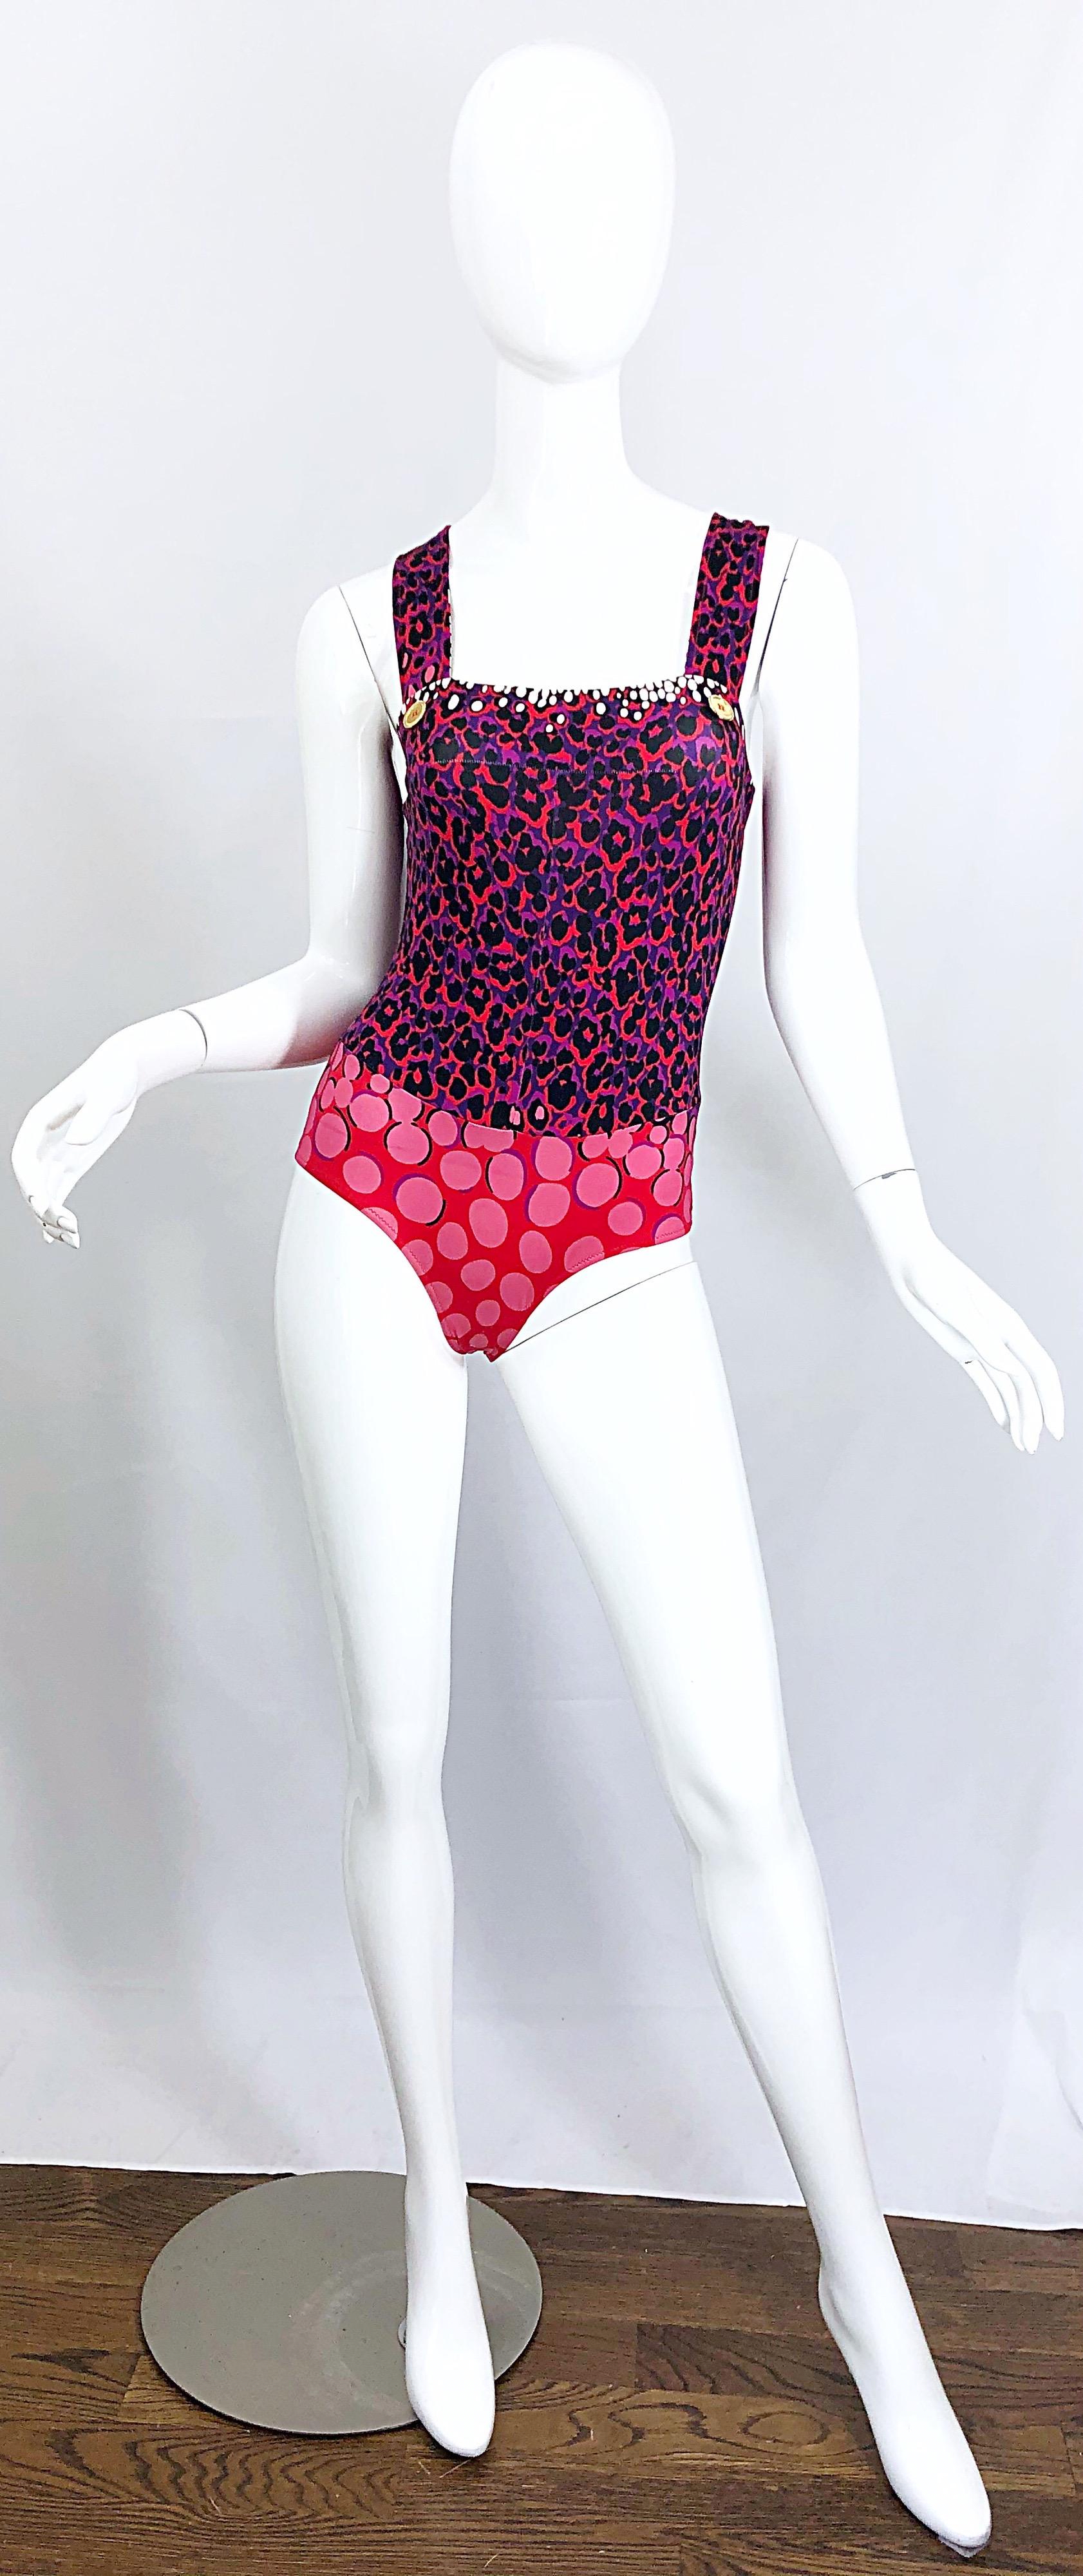 New Yves Saint Laurent Leopard Polka Dot Purple Red One Piece Swimsuit Bodysuit For Sale 5